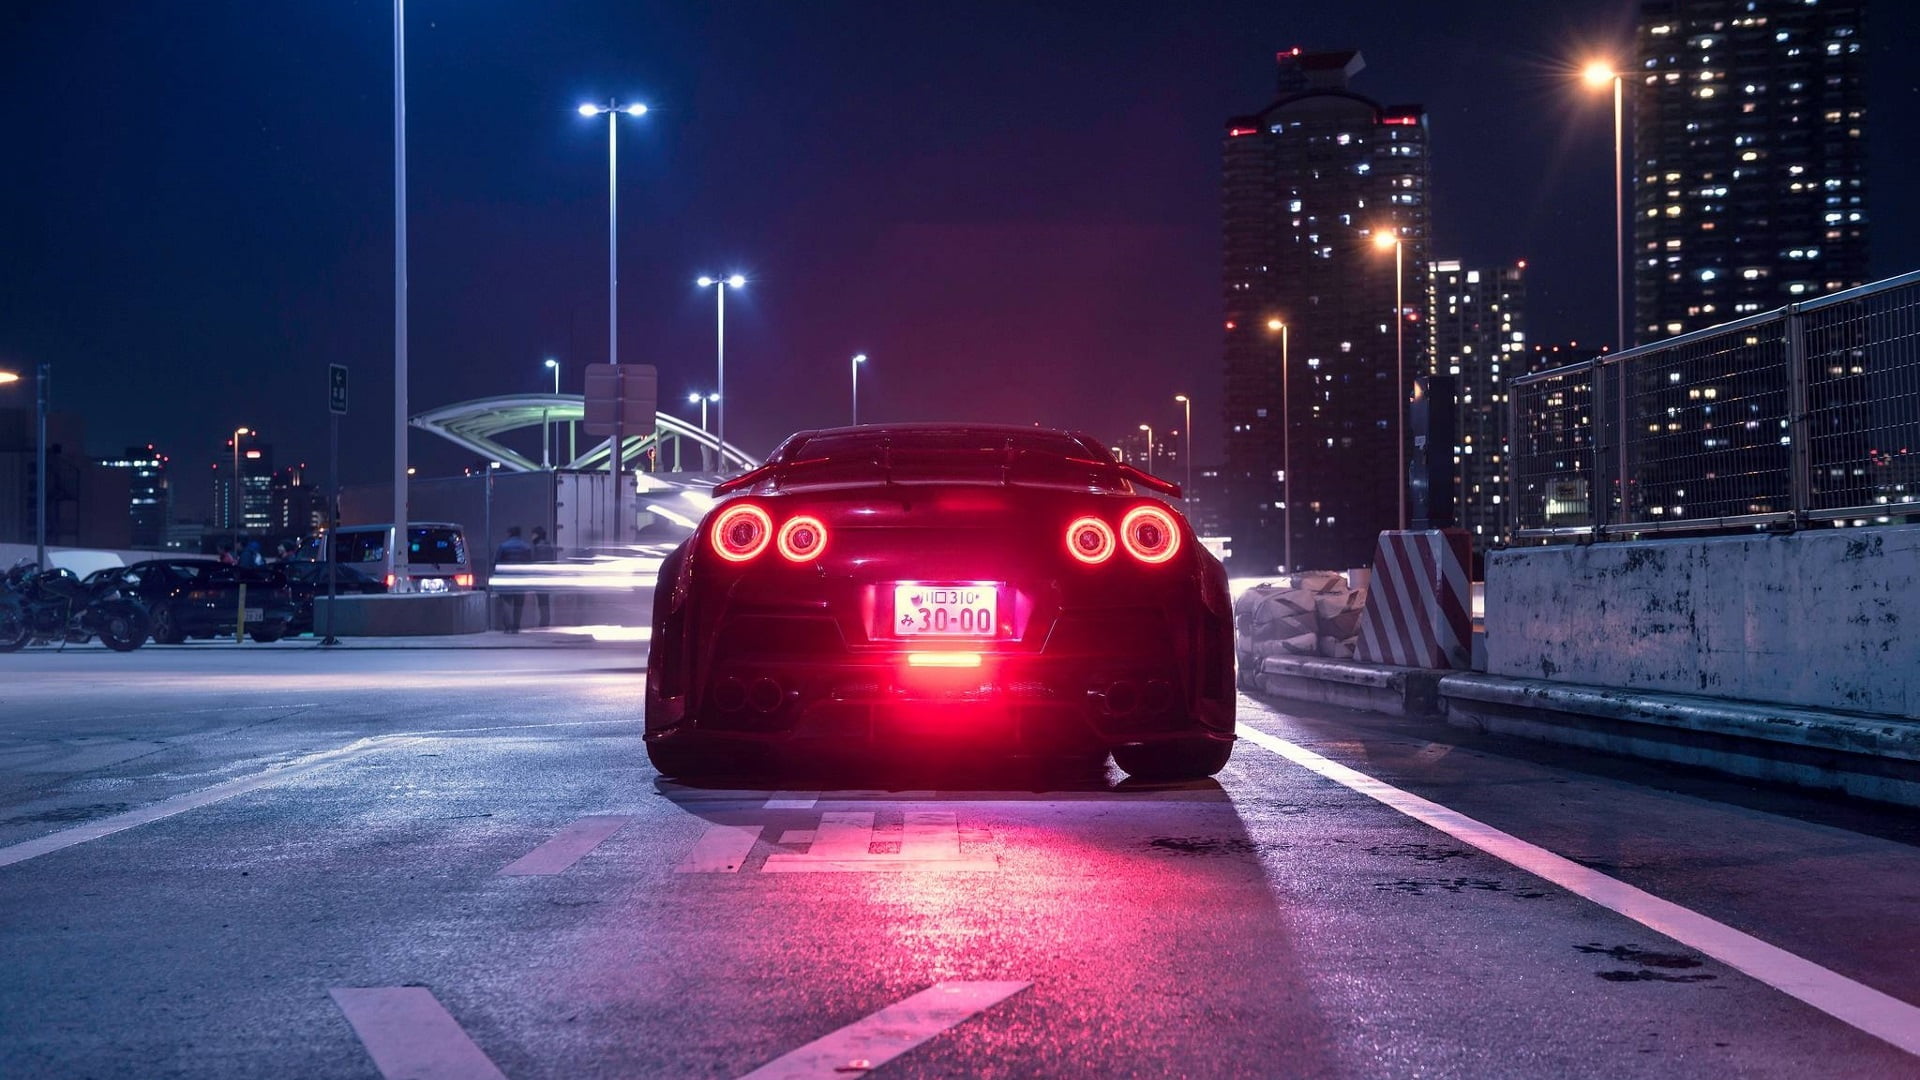 Nissan GT-R, Japanese cars, JDM, night, city, vehicle, rear view